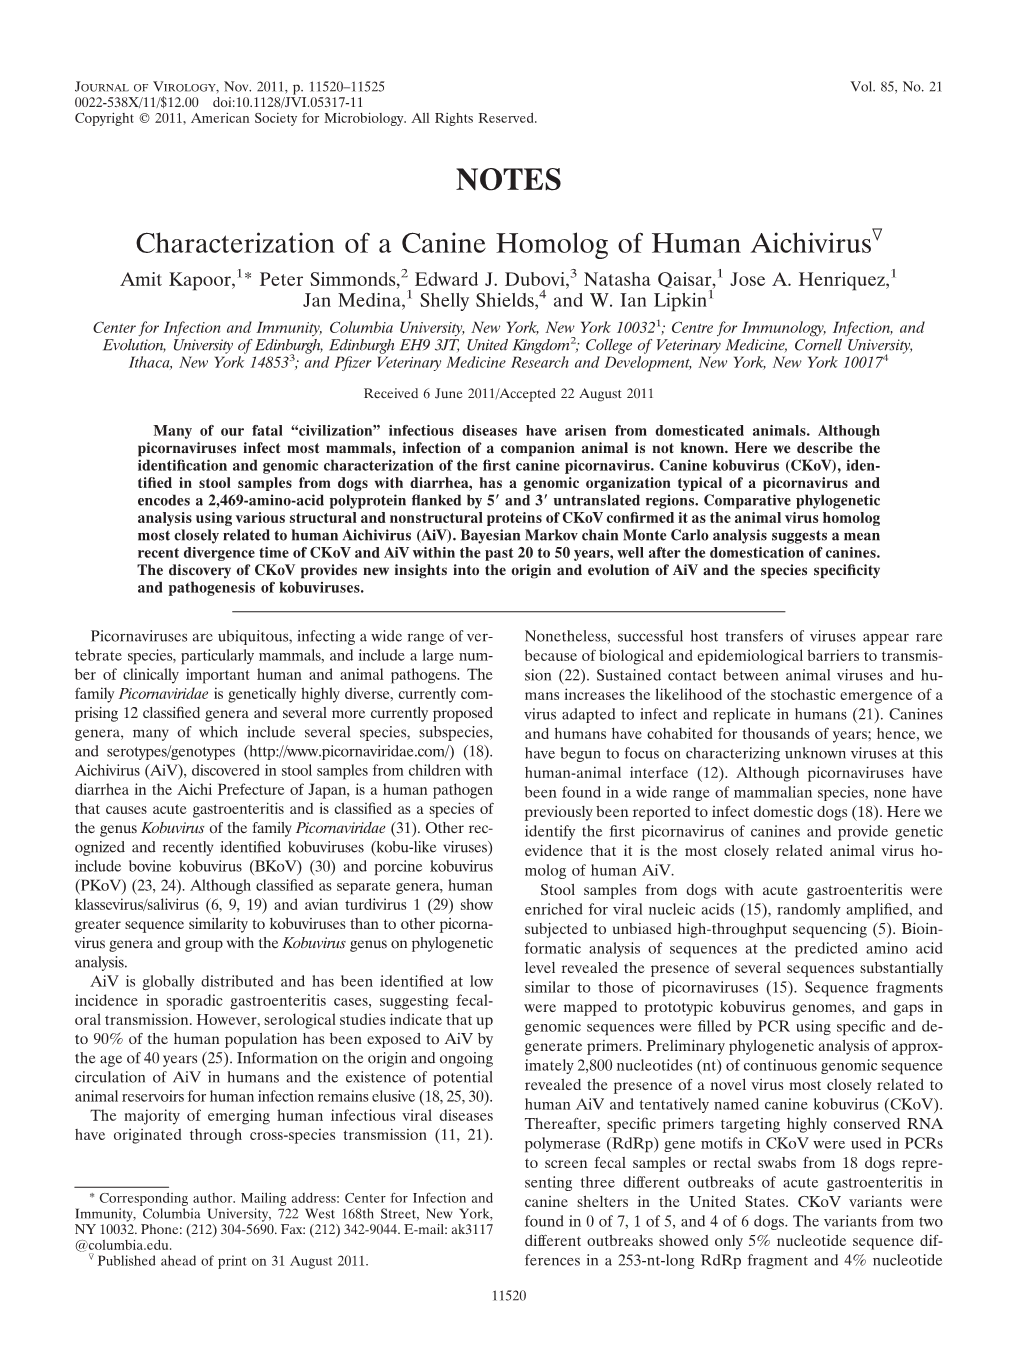 Characterization of a Canine Homolog of Human Aichivirusᰔ Amit Kapoor,1* Peter Simmonds,2 Edward J